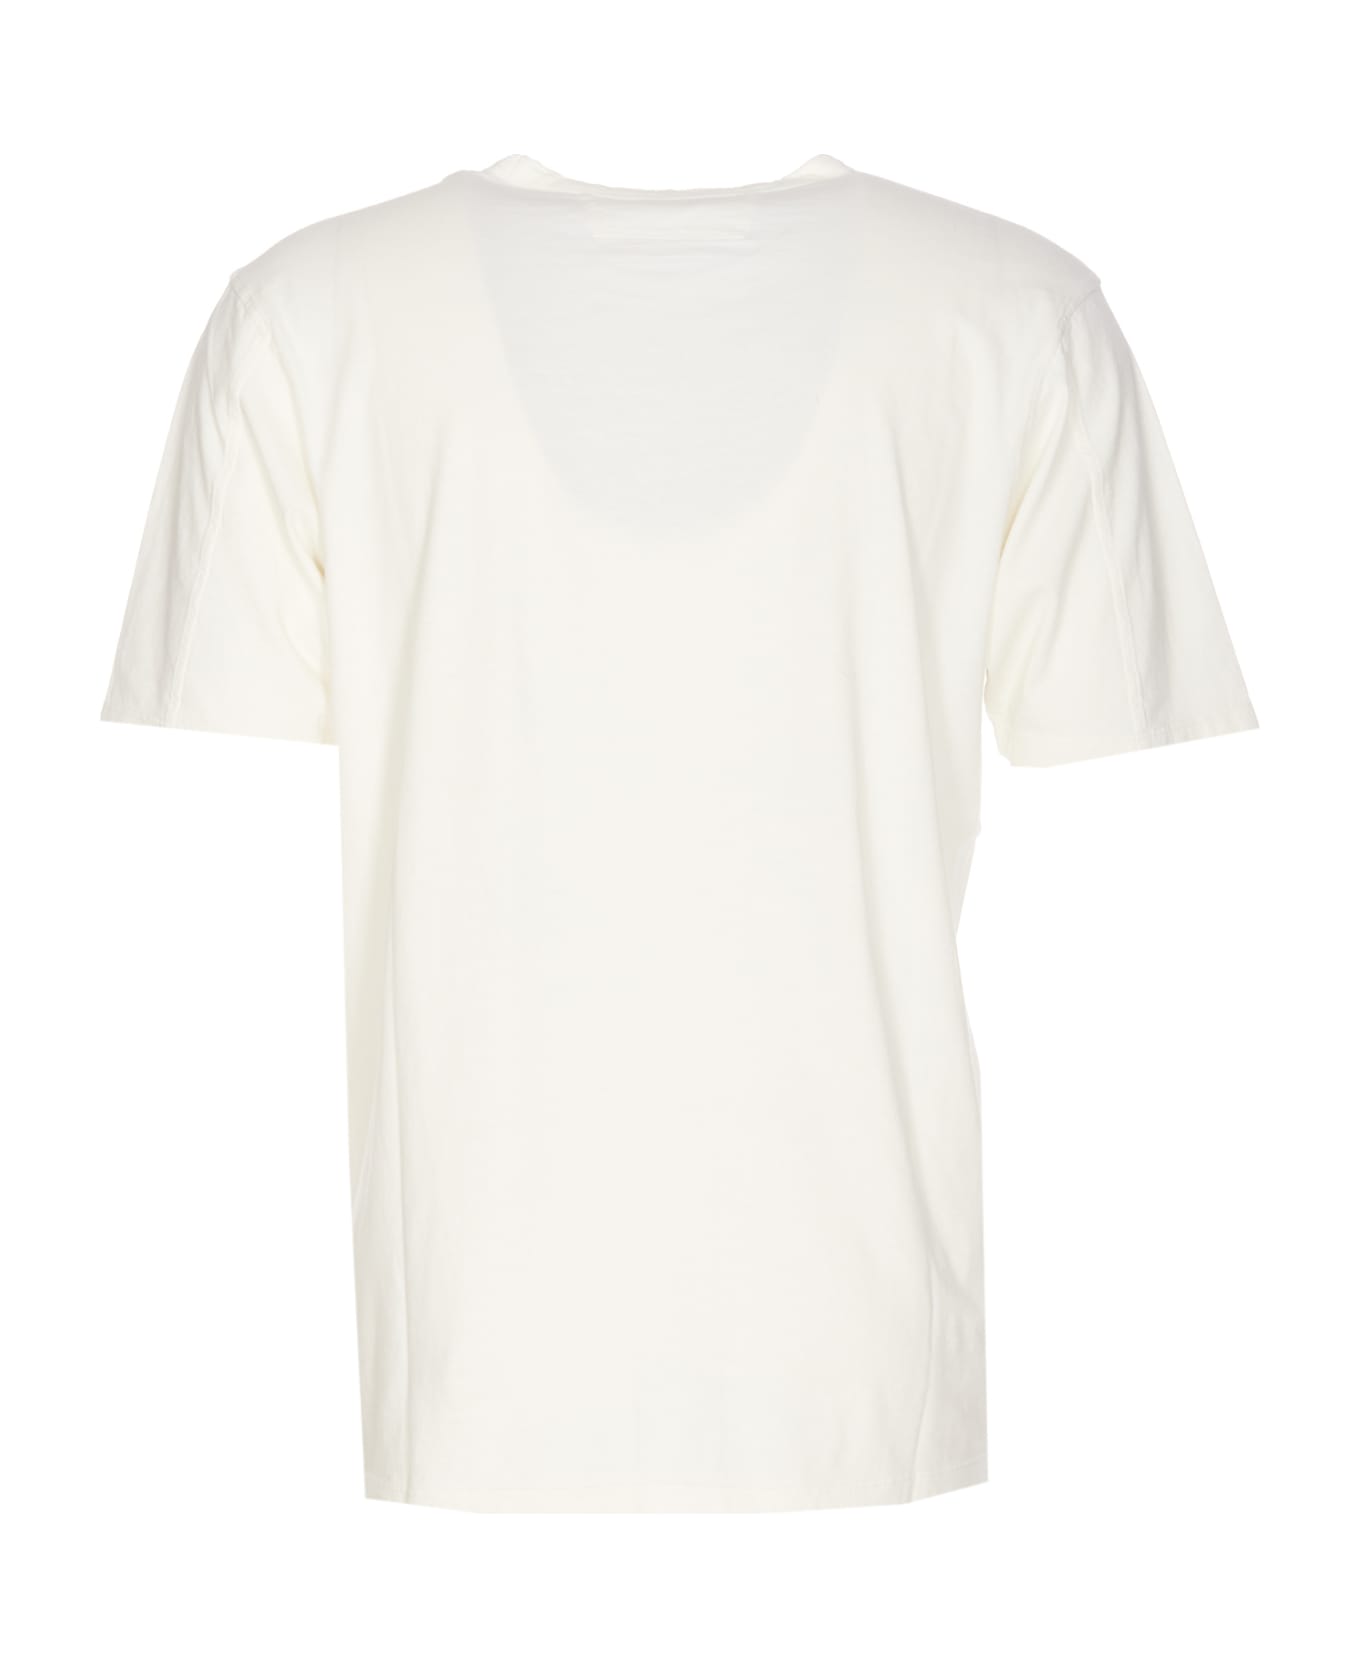 C.P. Company Logo T-shirt T-Shirt - GAUZE WHITE